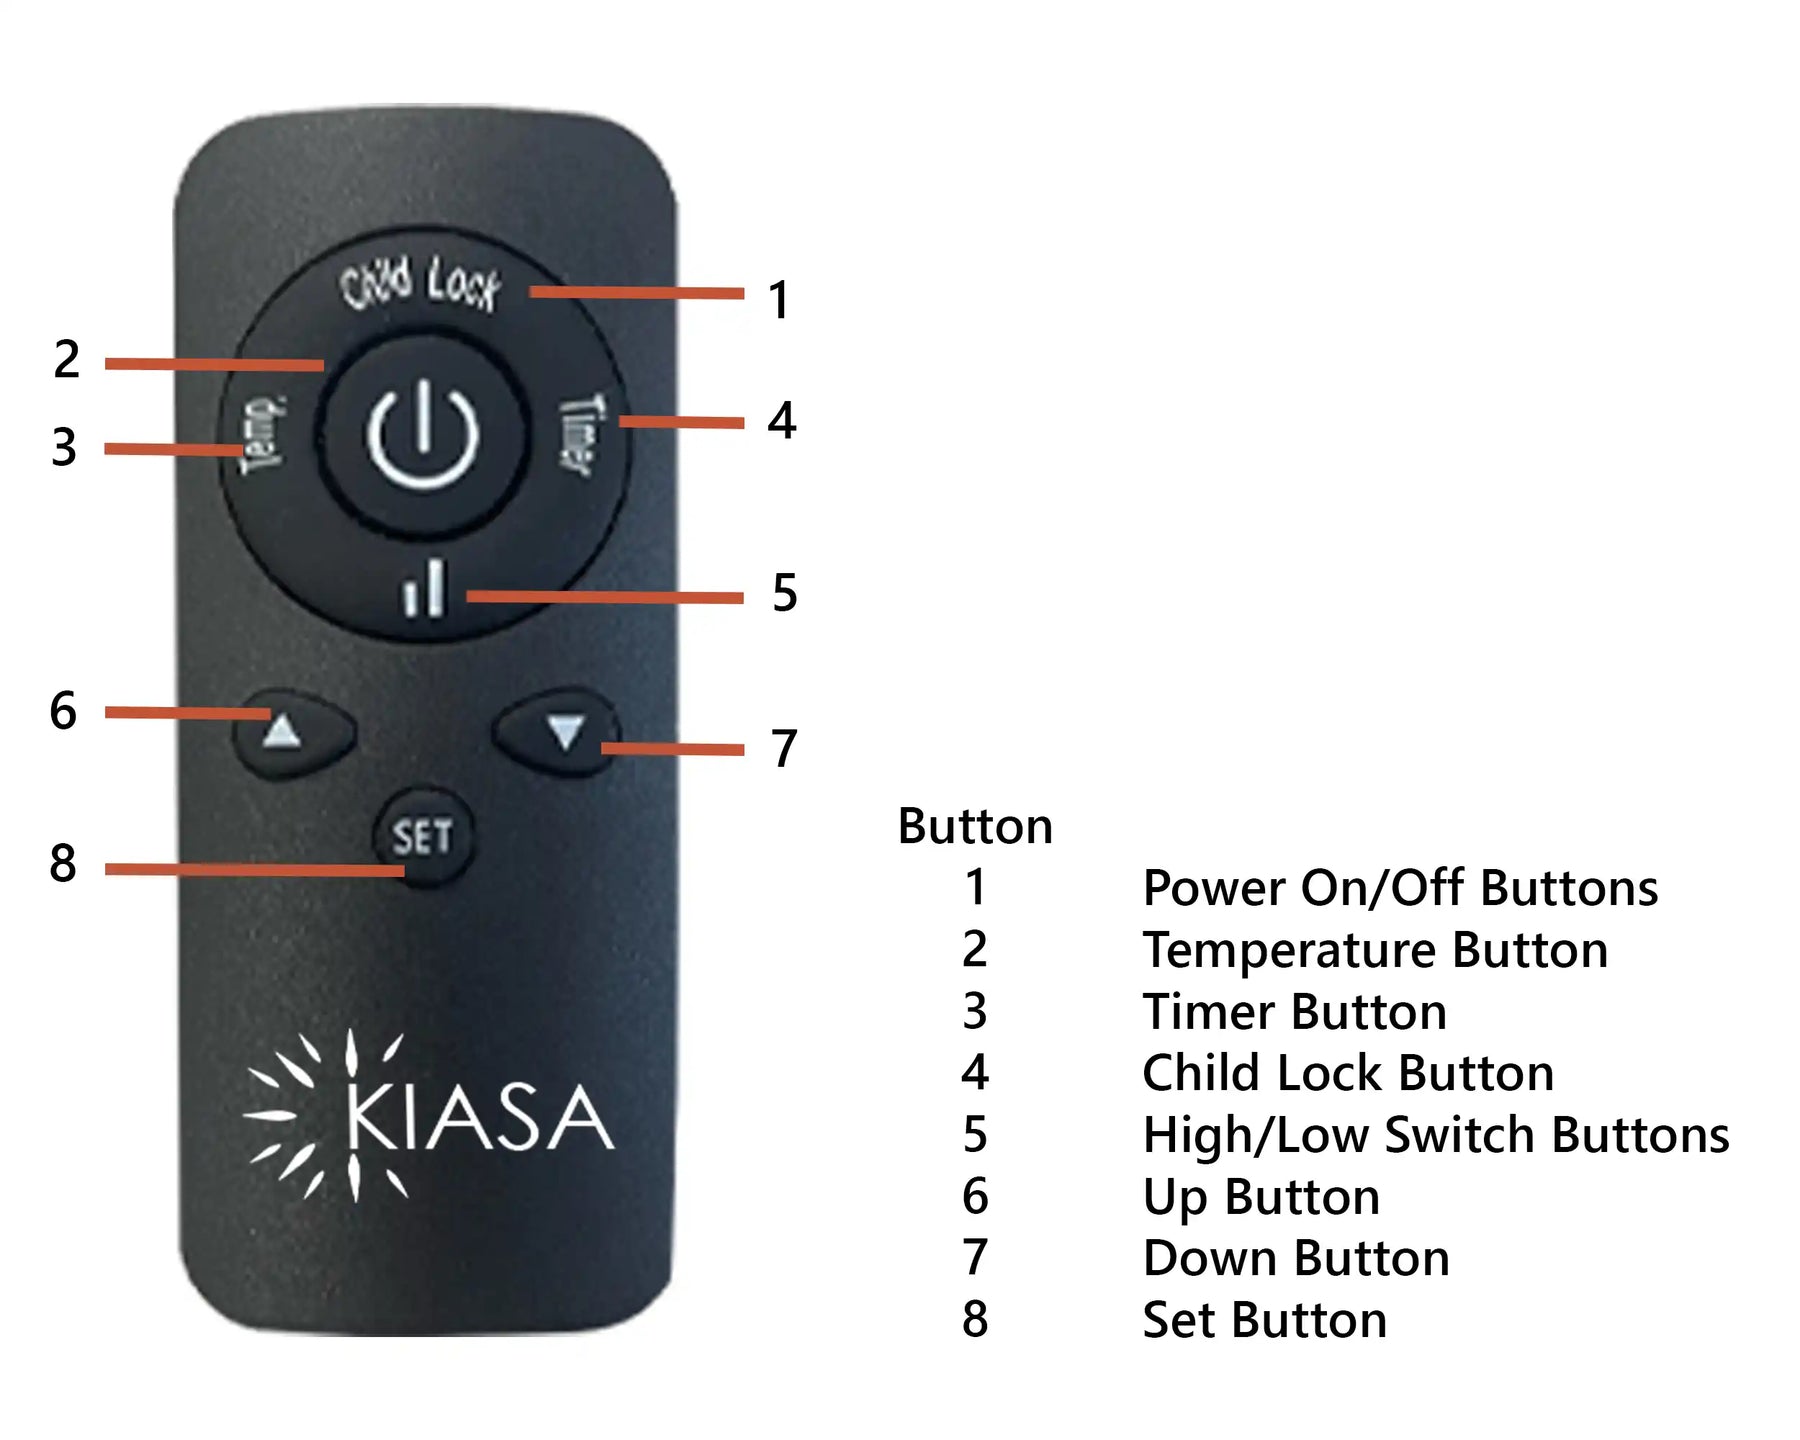 Kiasa 2Kw Smart Outdoor Heater with Timer